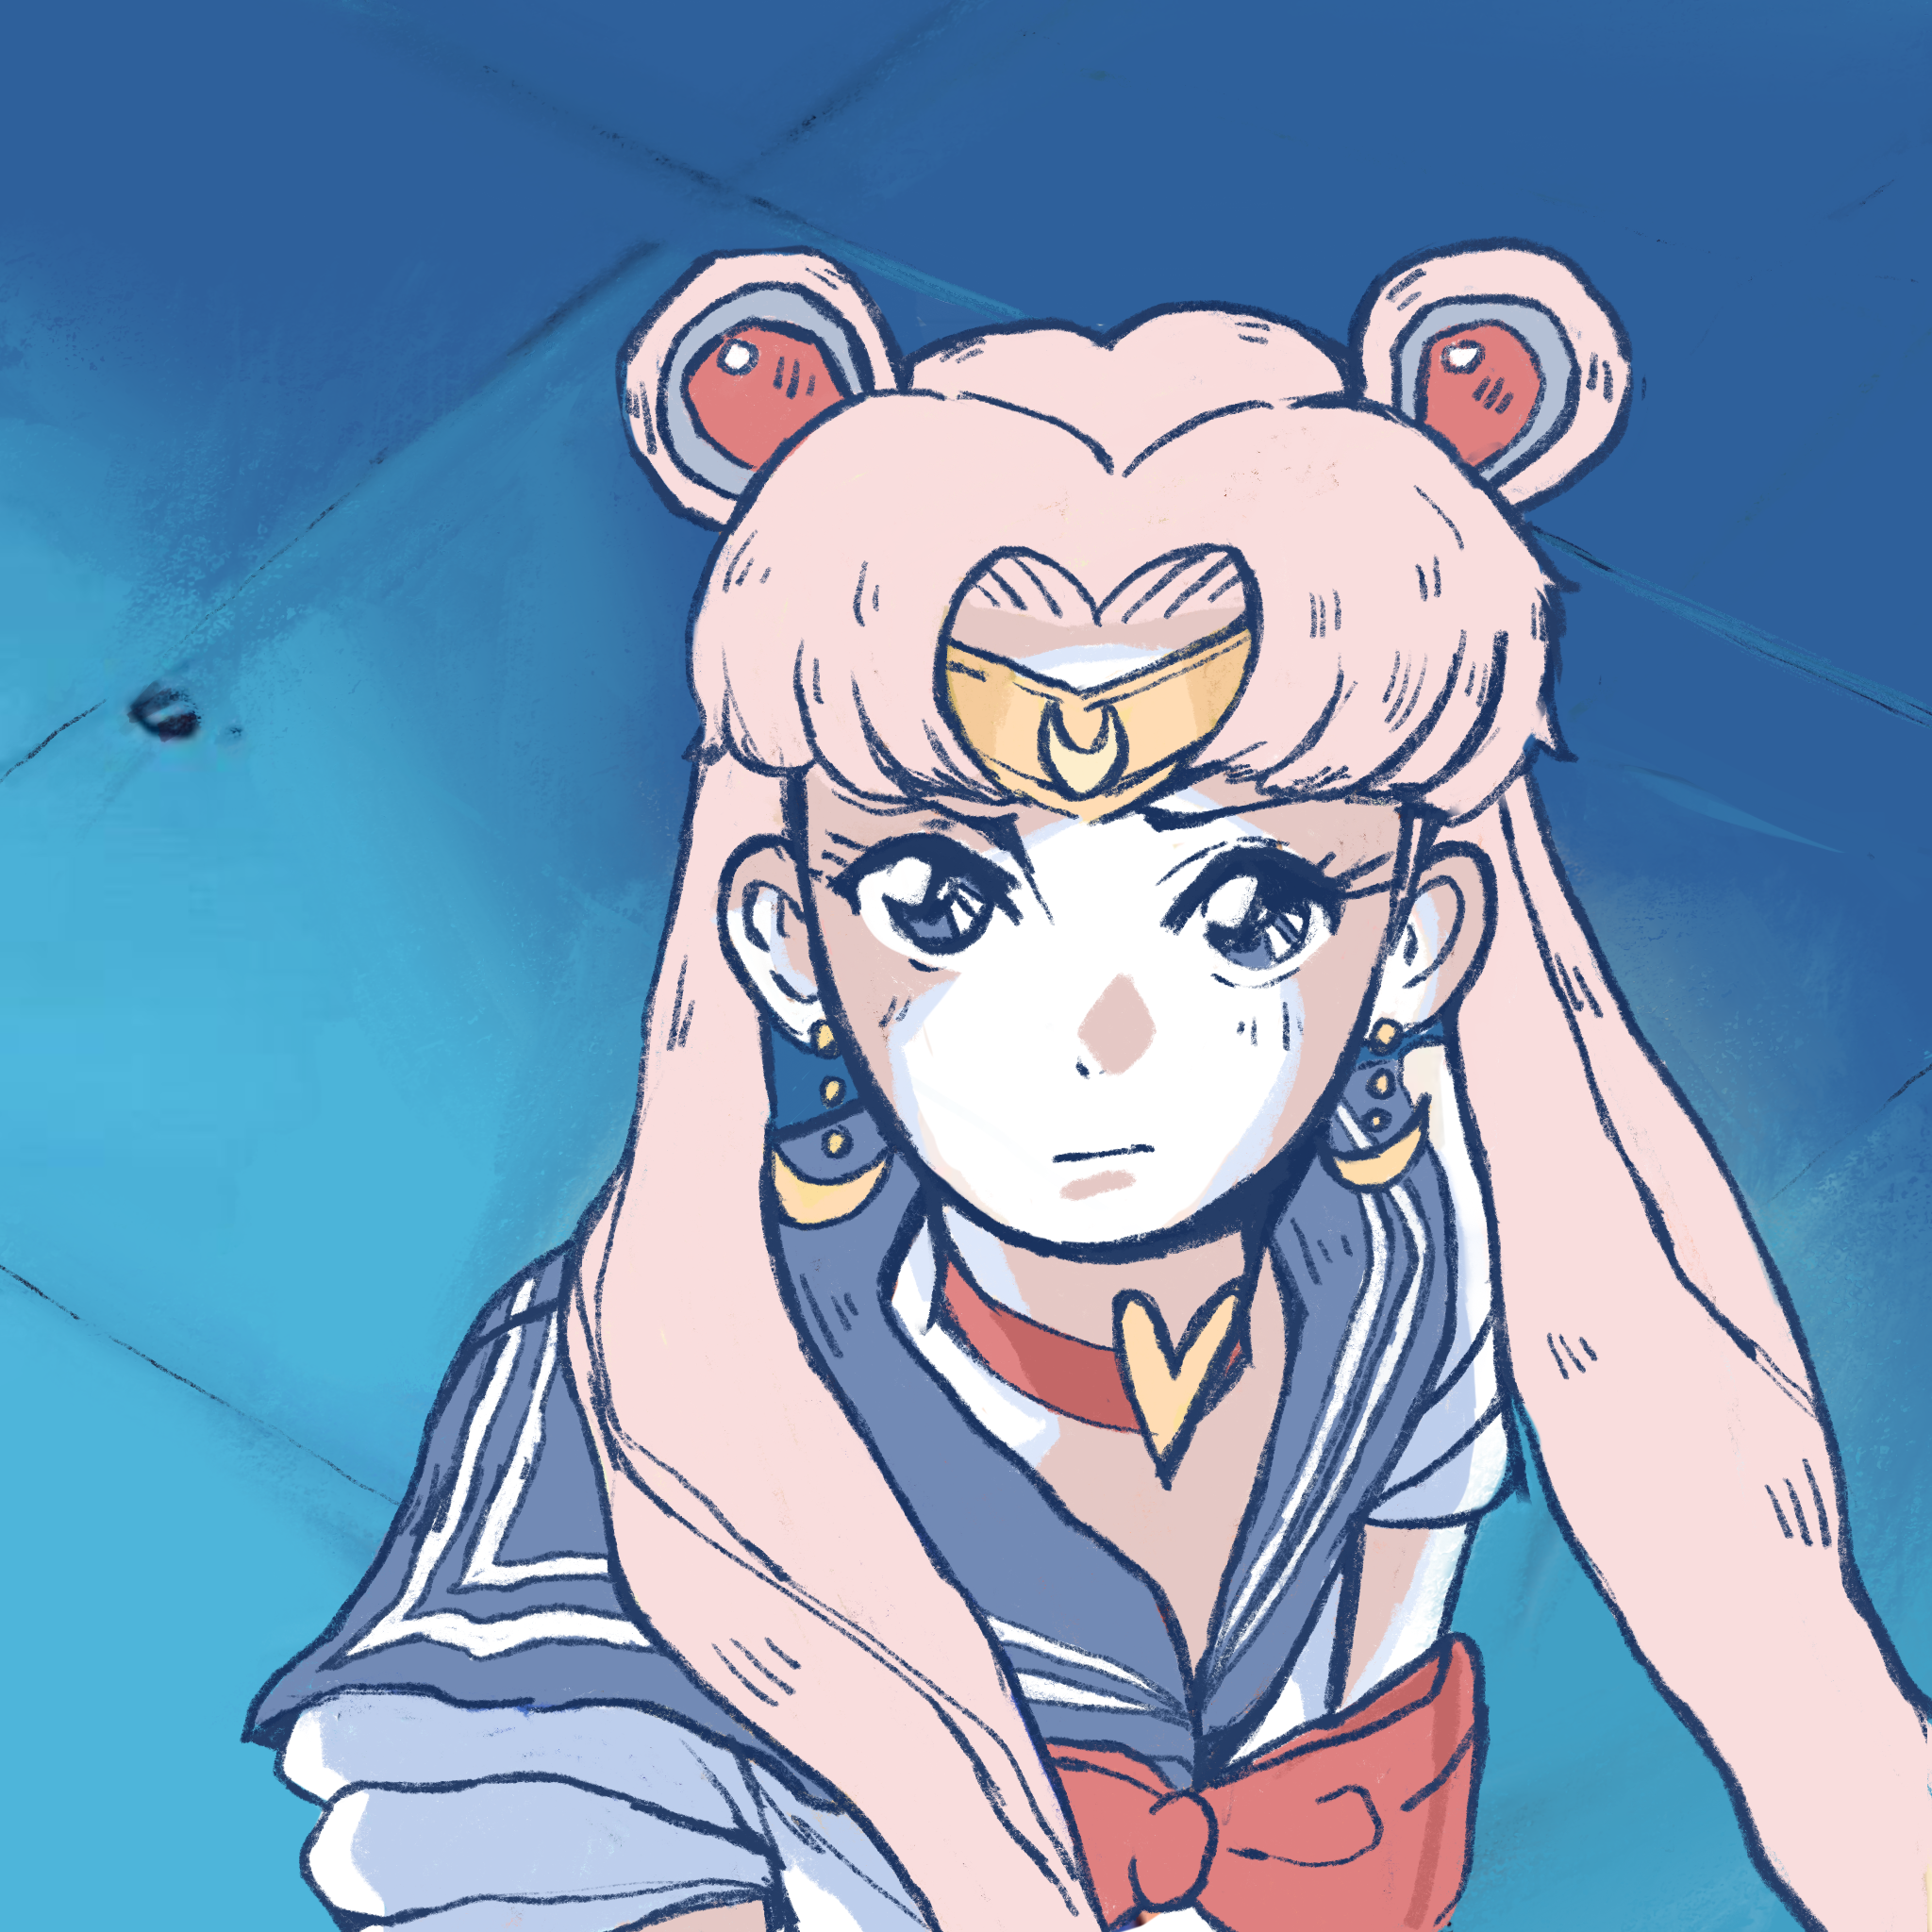 Illustration by Gu of Sailor Moon